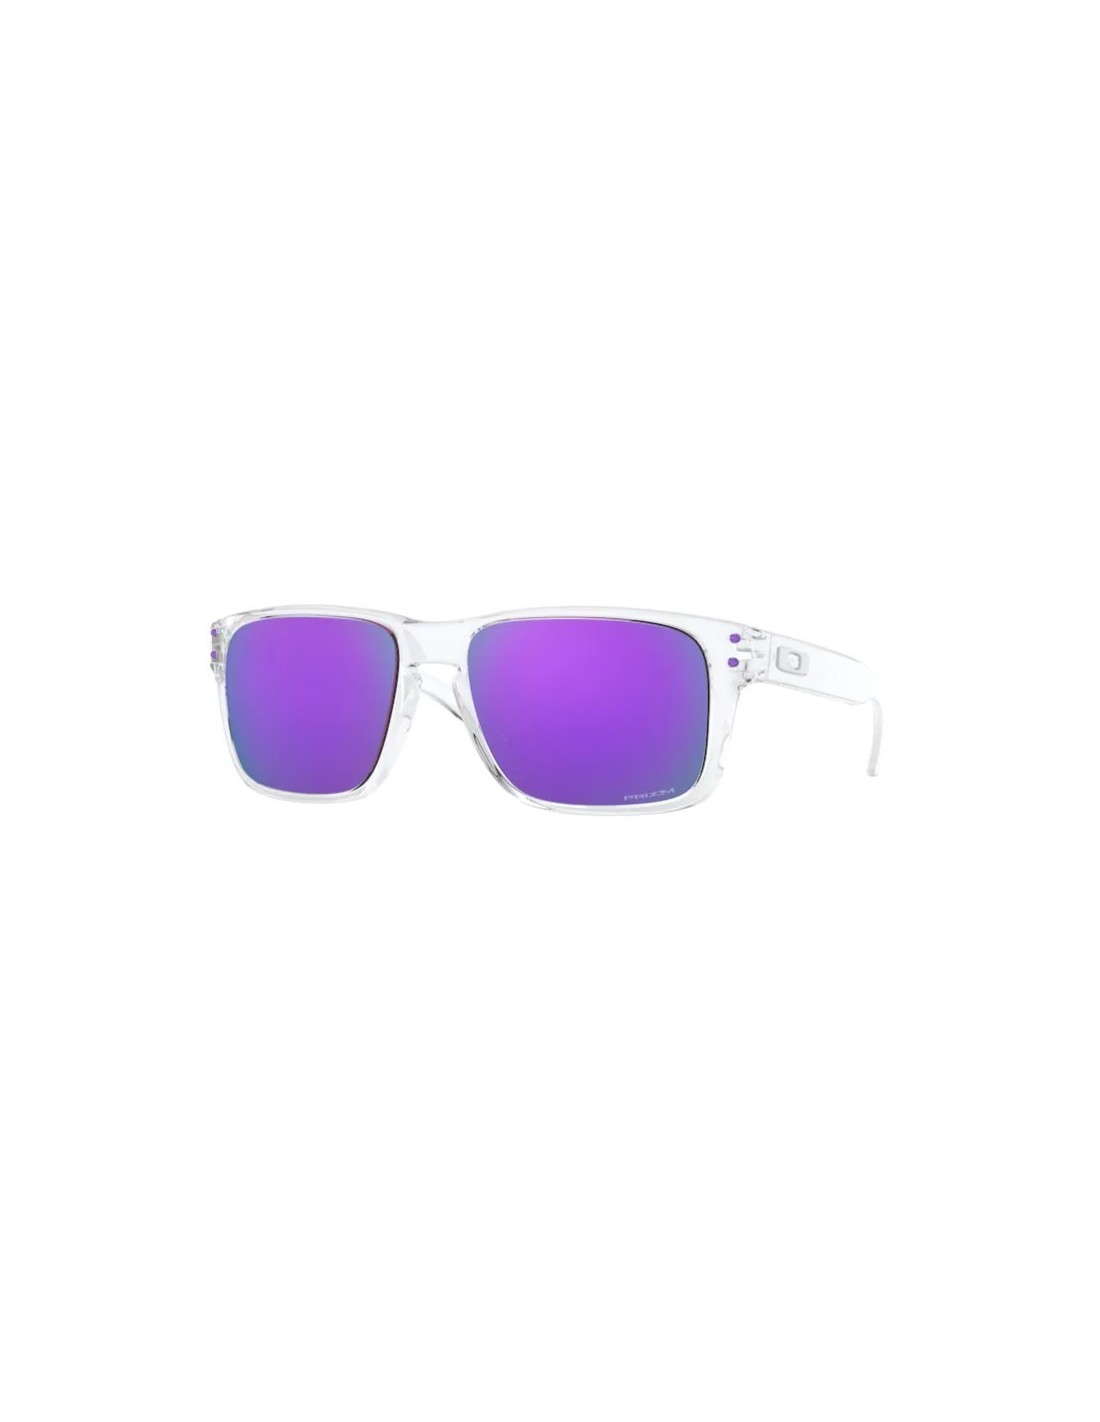 Sunglasses OAKLEY HOLBROOK XS 9007-10 Polished Clear Prizm Violet o...